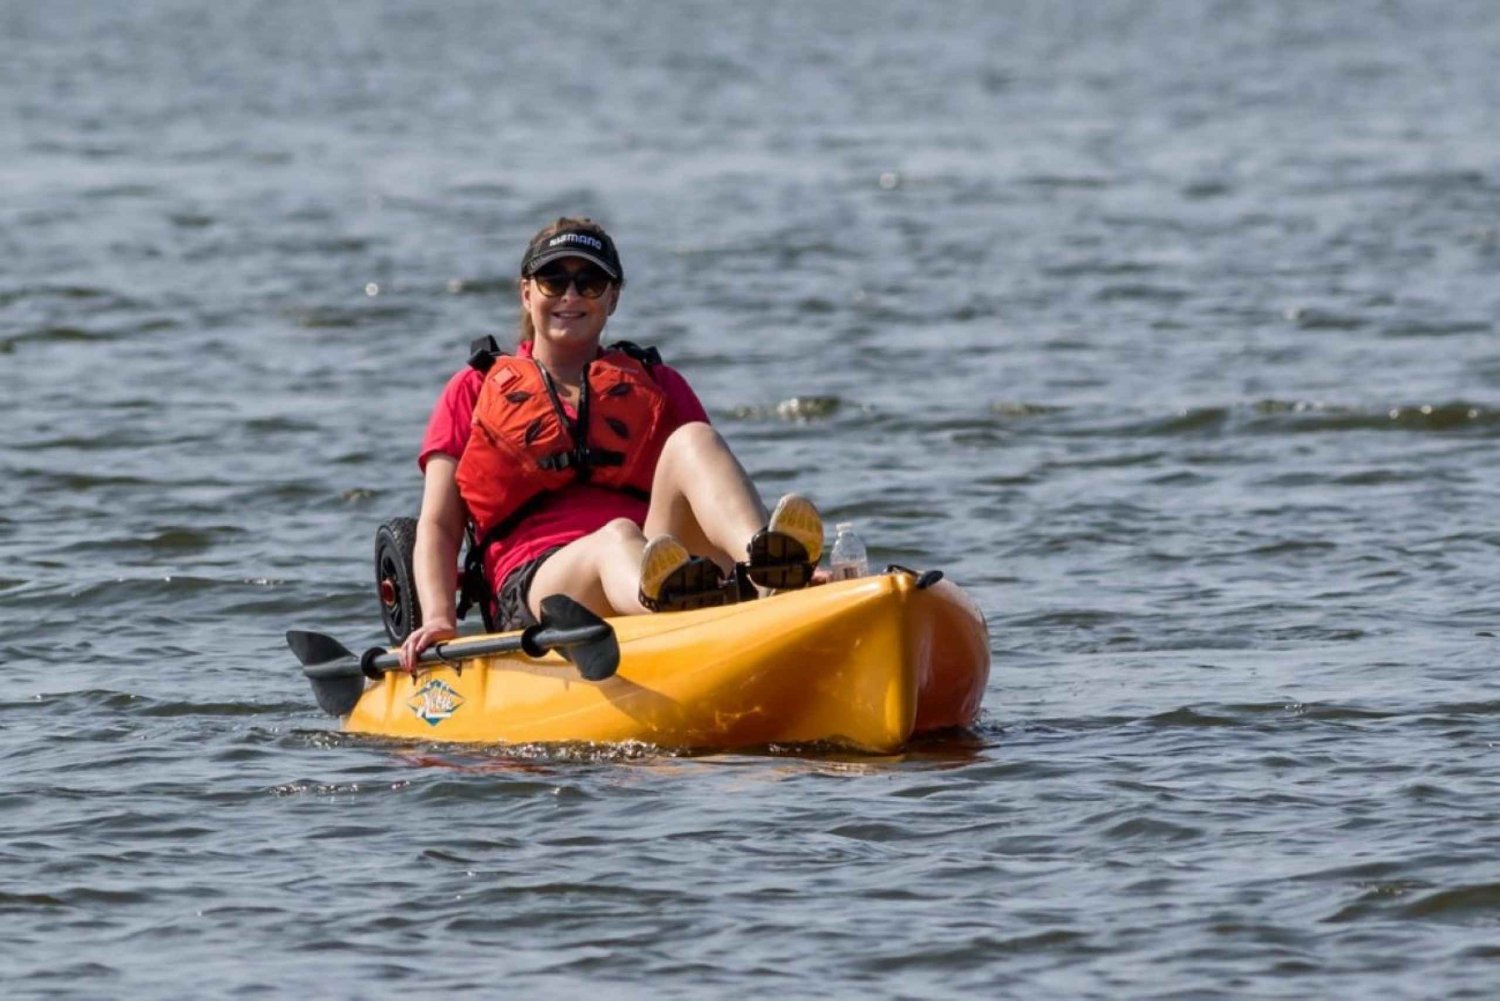 Condado: noleggio kayak a pedali